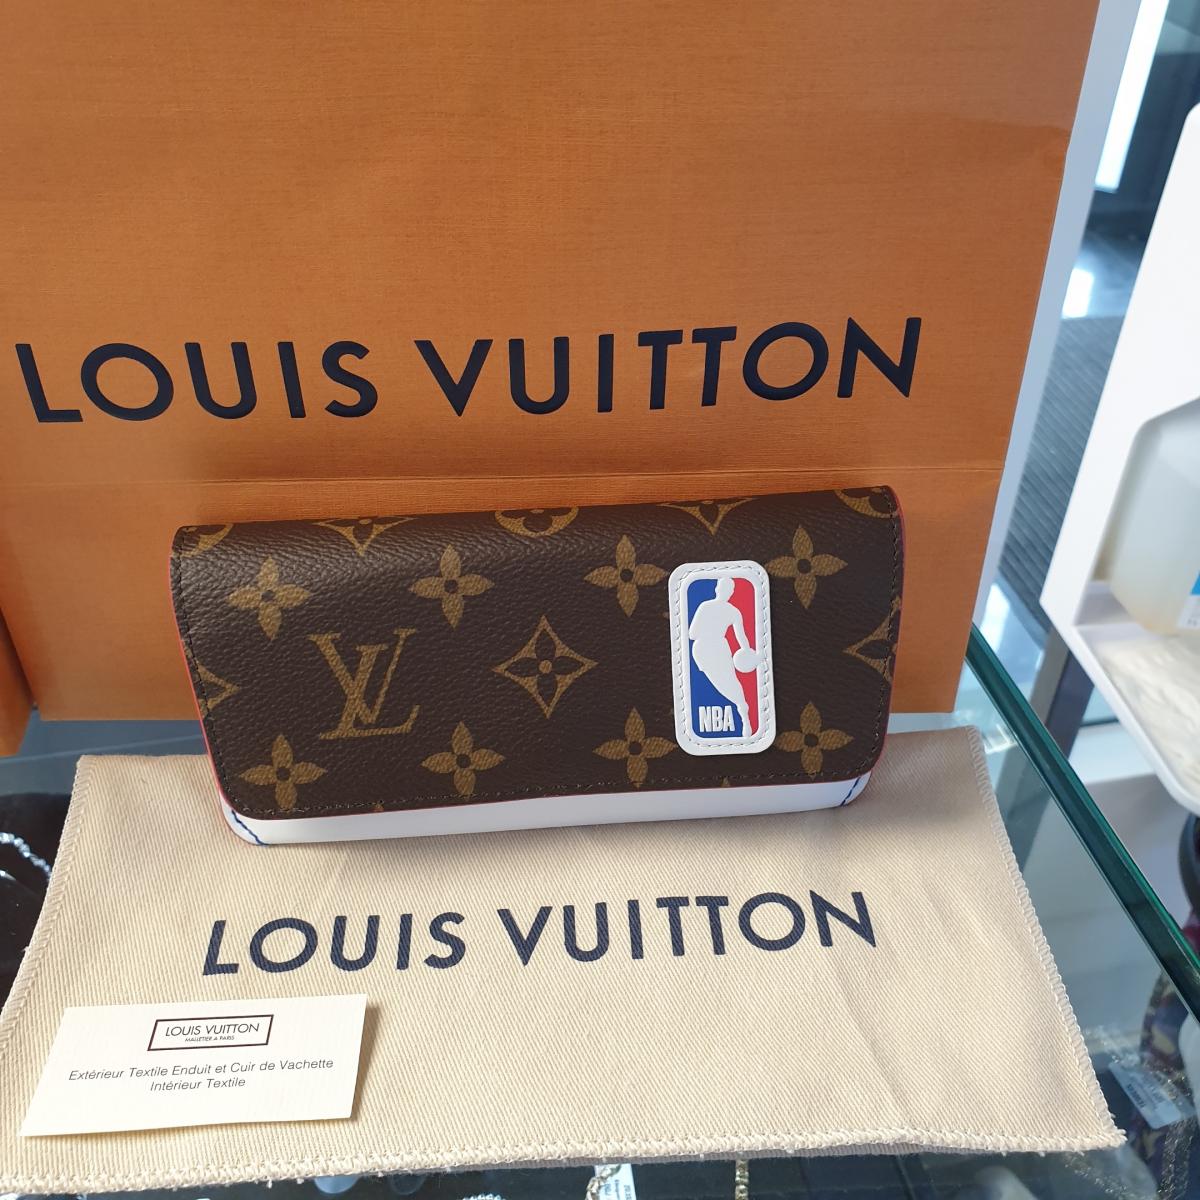 Louis Vuitton NBA Sunglass box